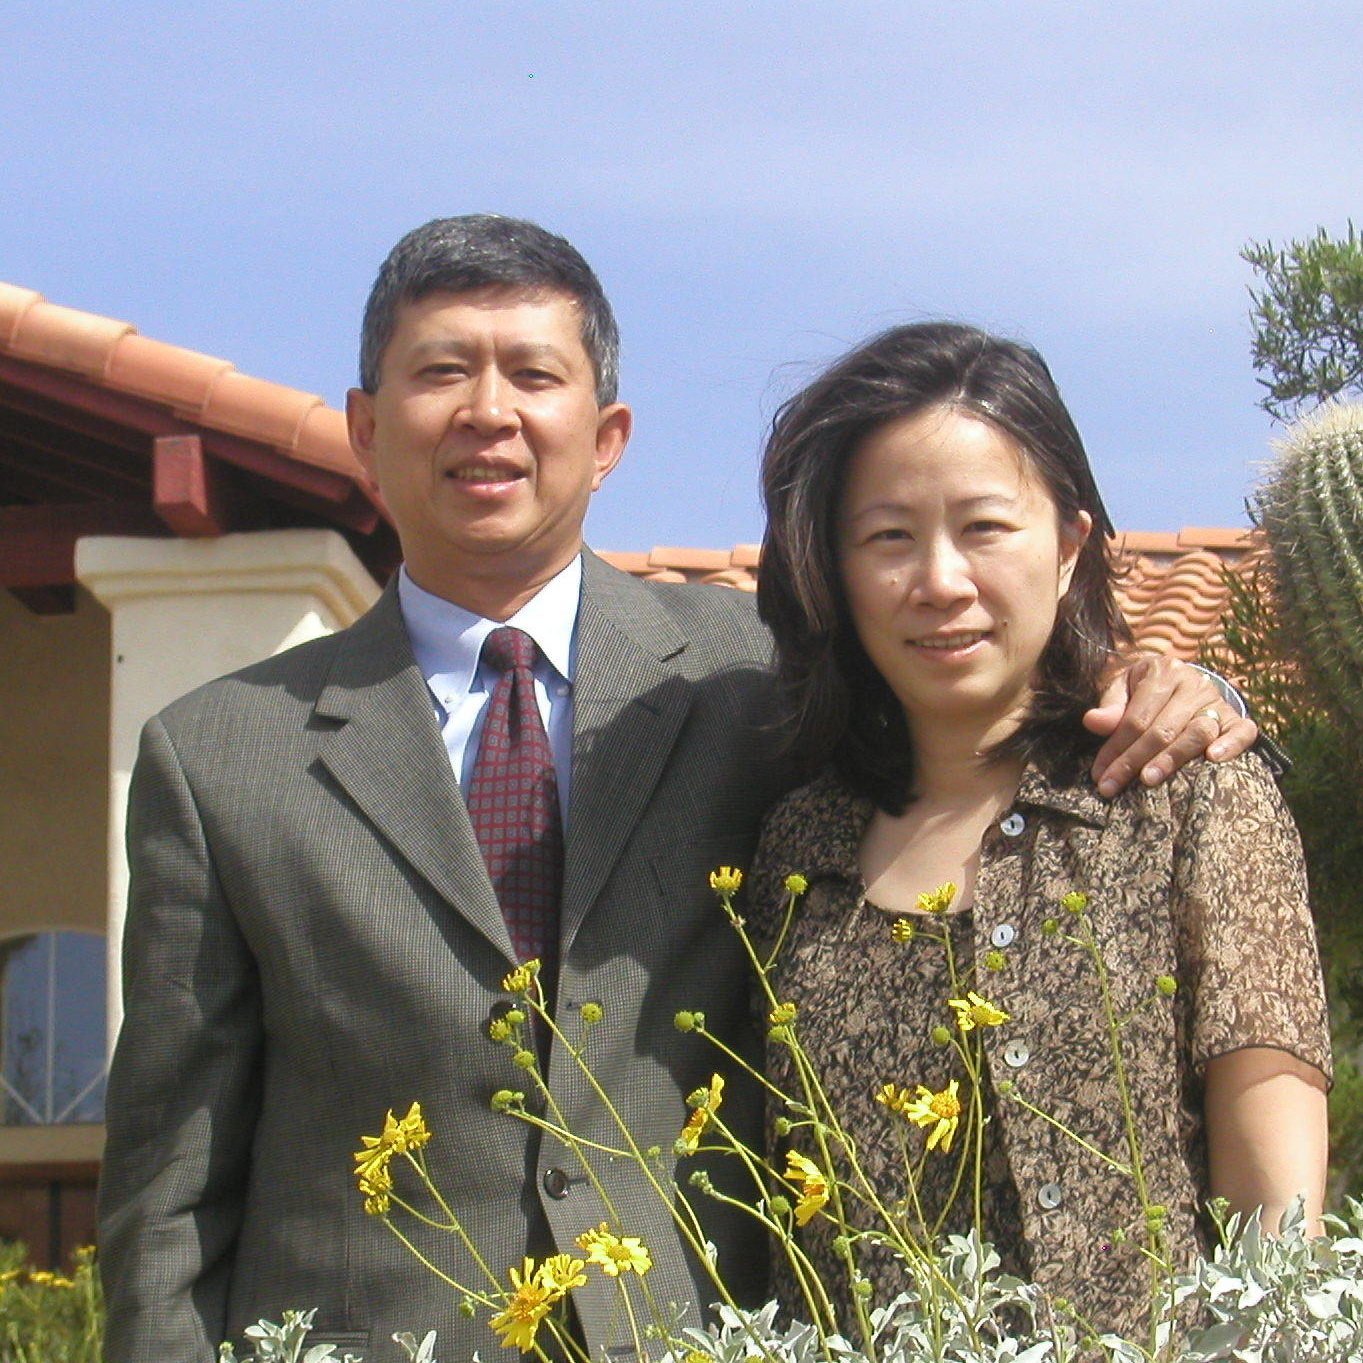 Hsinchun Chen, MBA ’85 and Hsiao-Hui Chow, PhD ’89